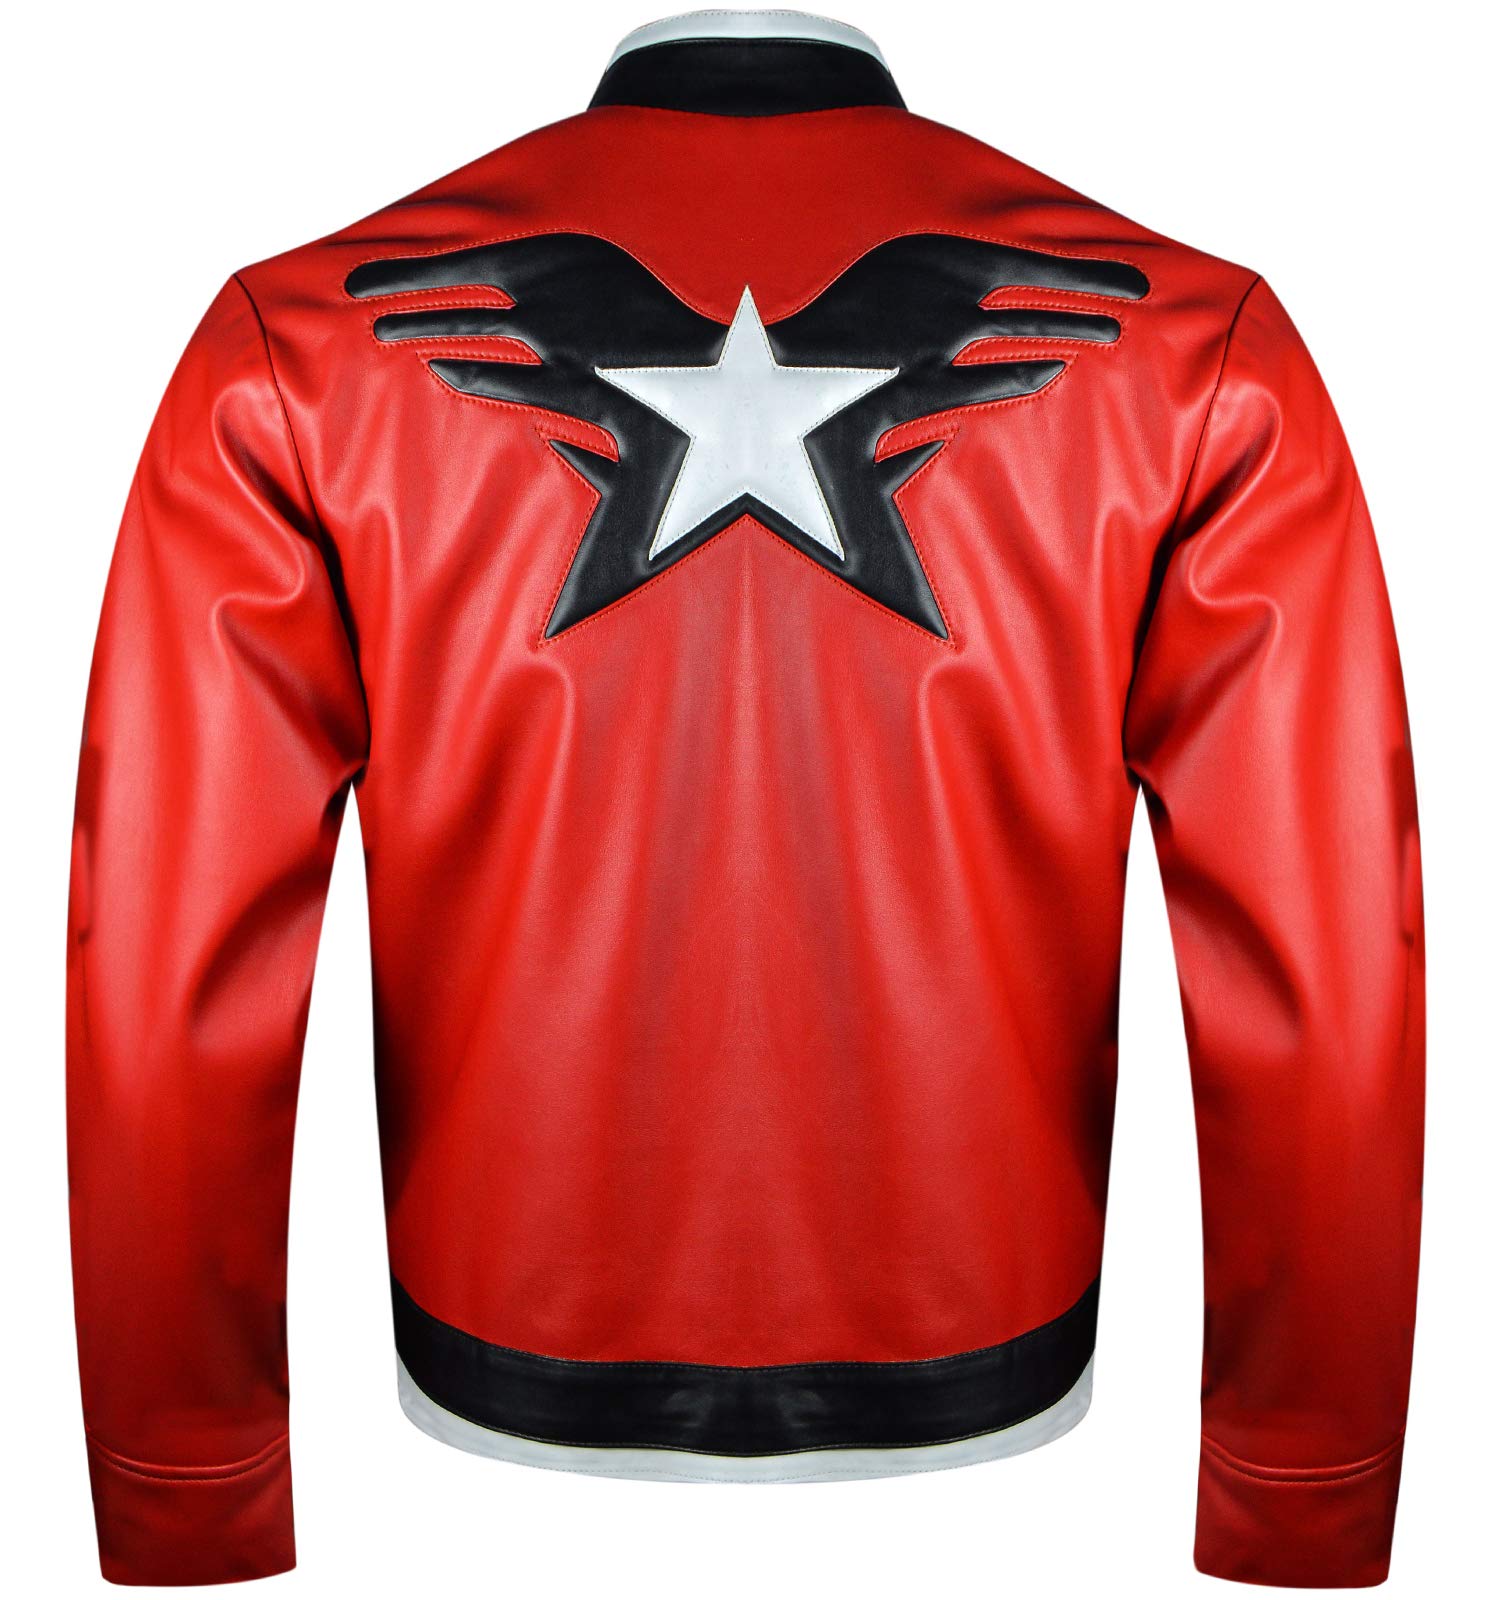 Rock Howard King of Fighters XIV Jacket